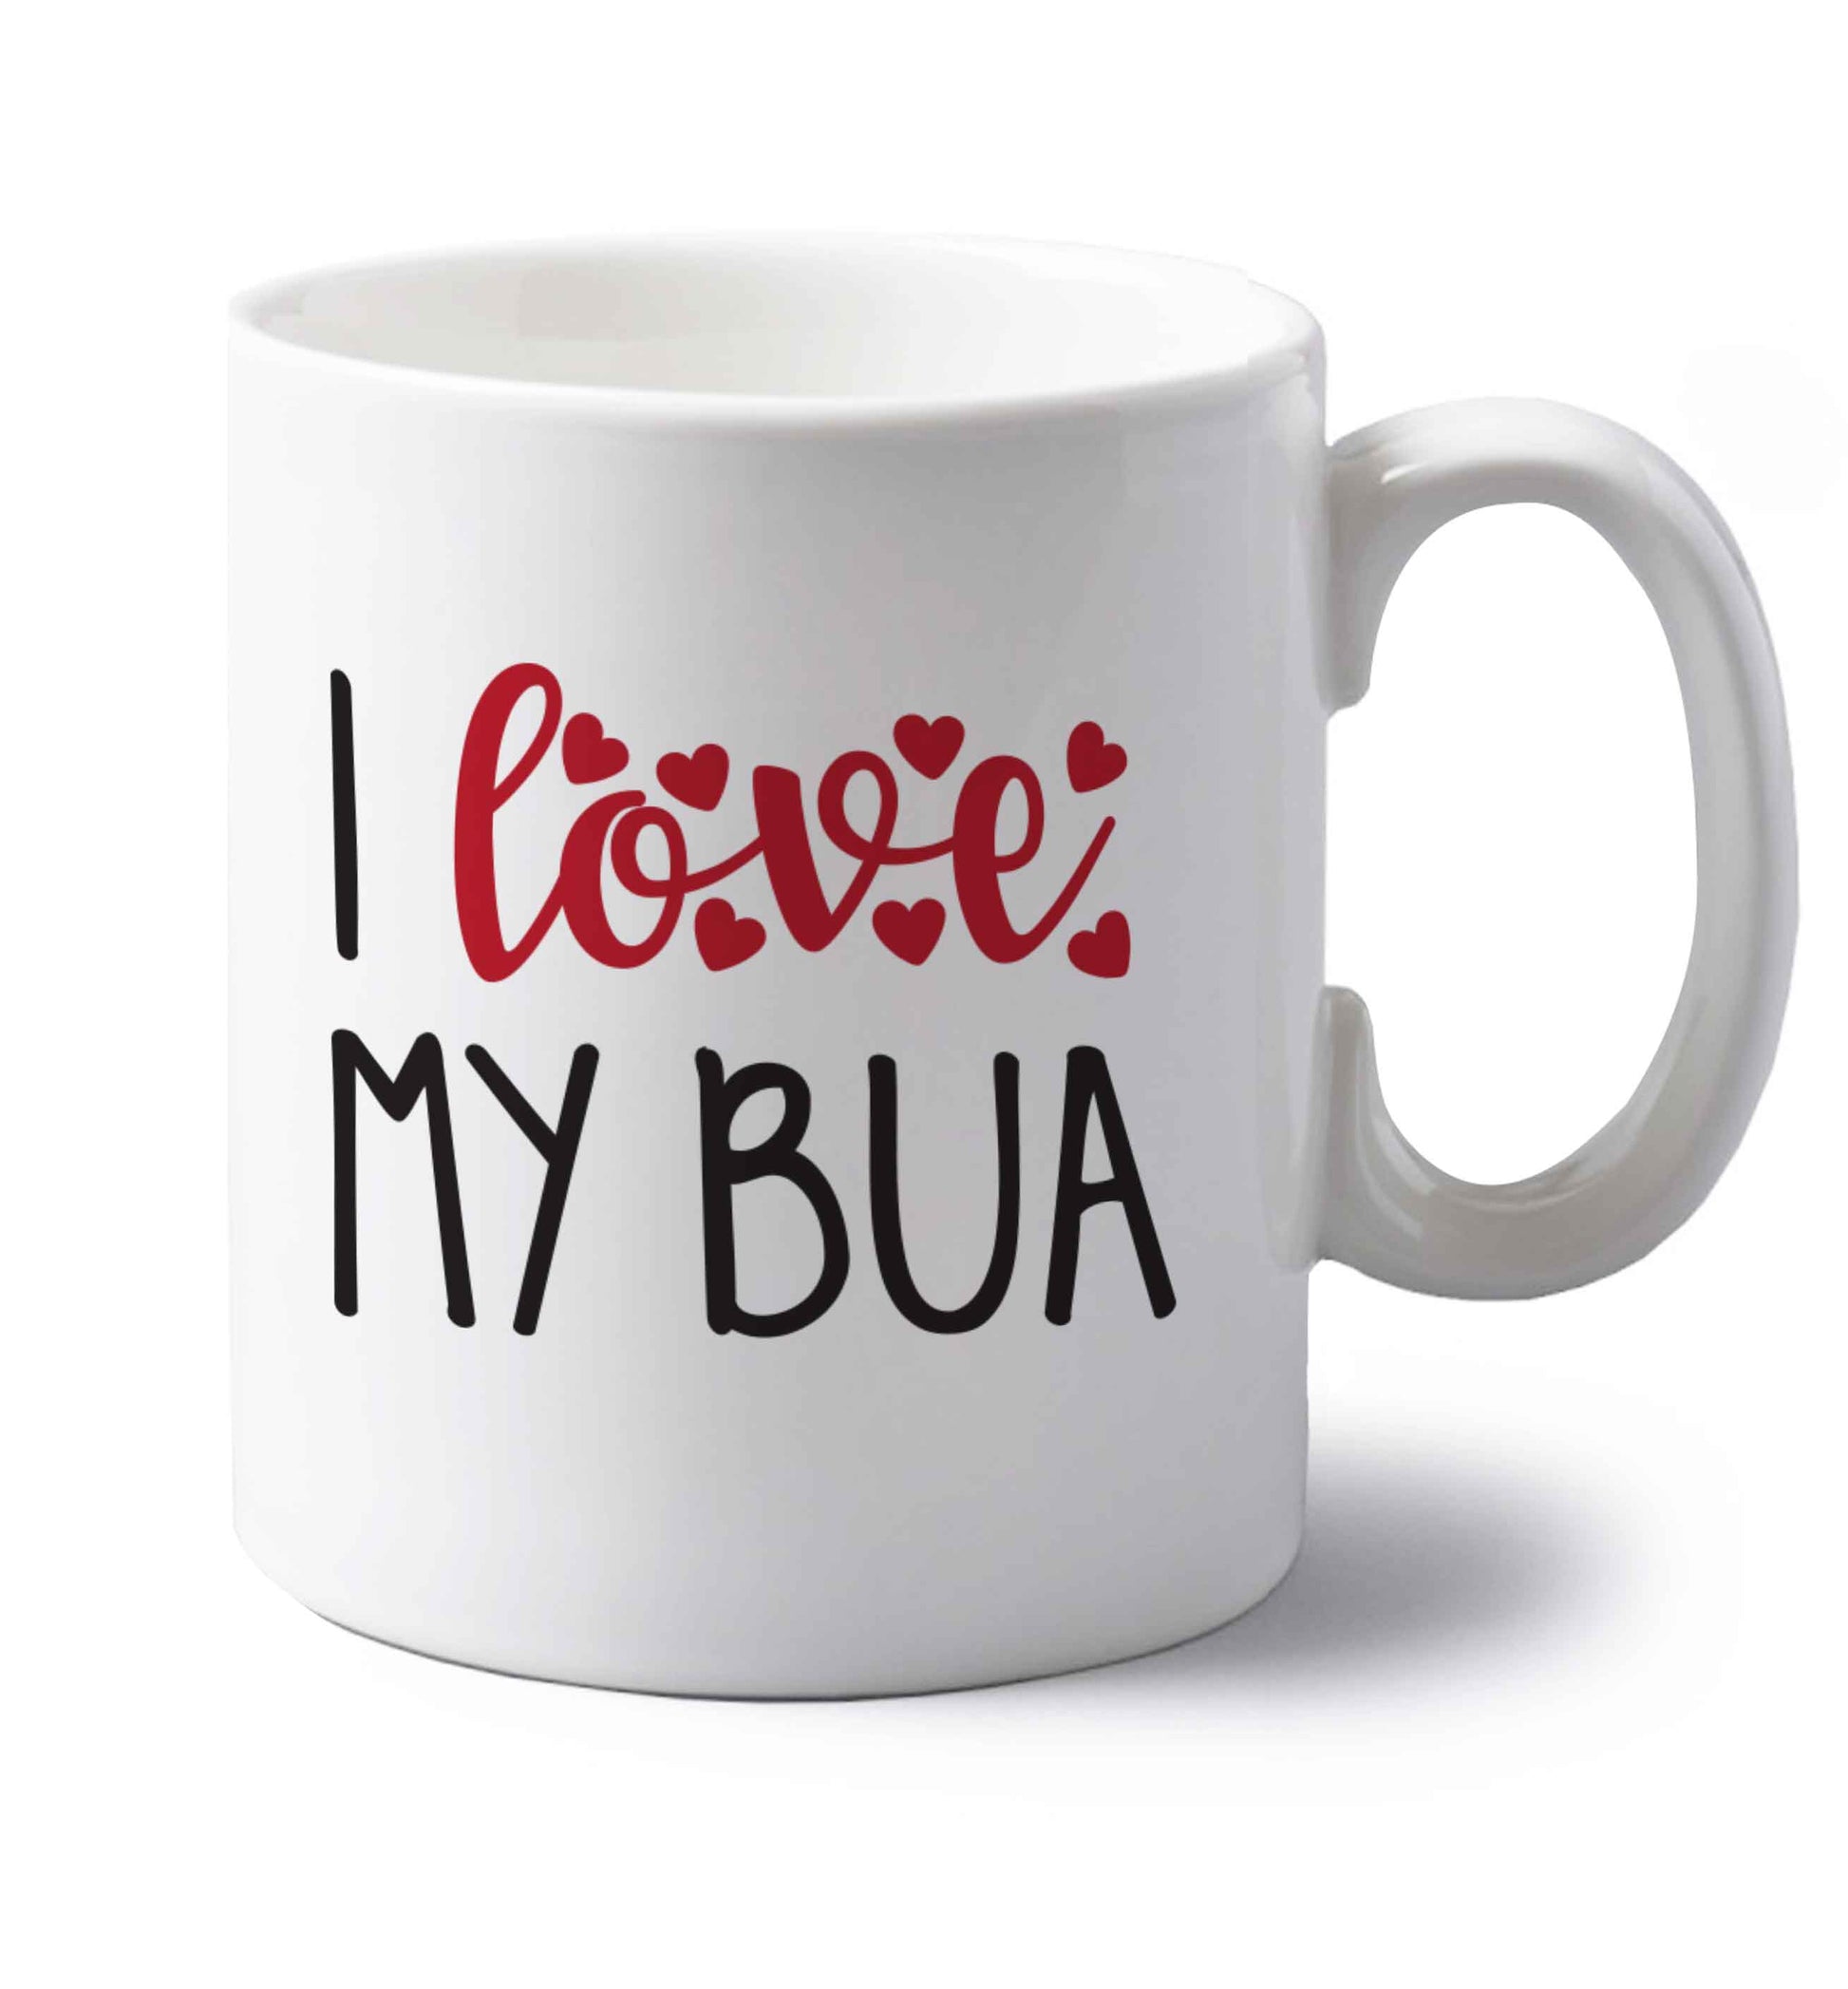 I love my bua left handed white ceramic mug 